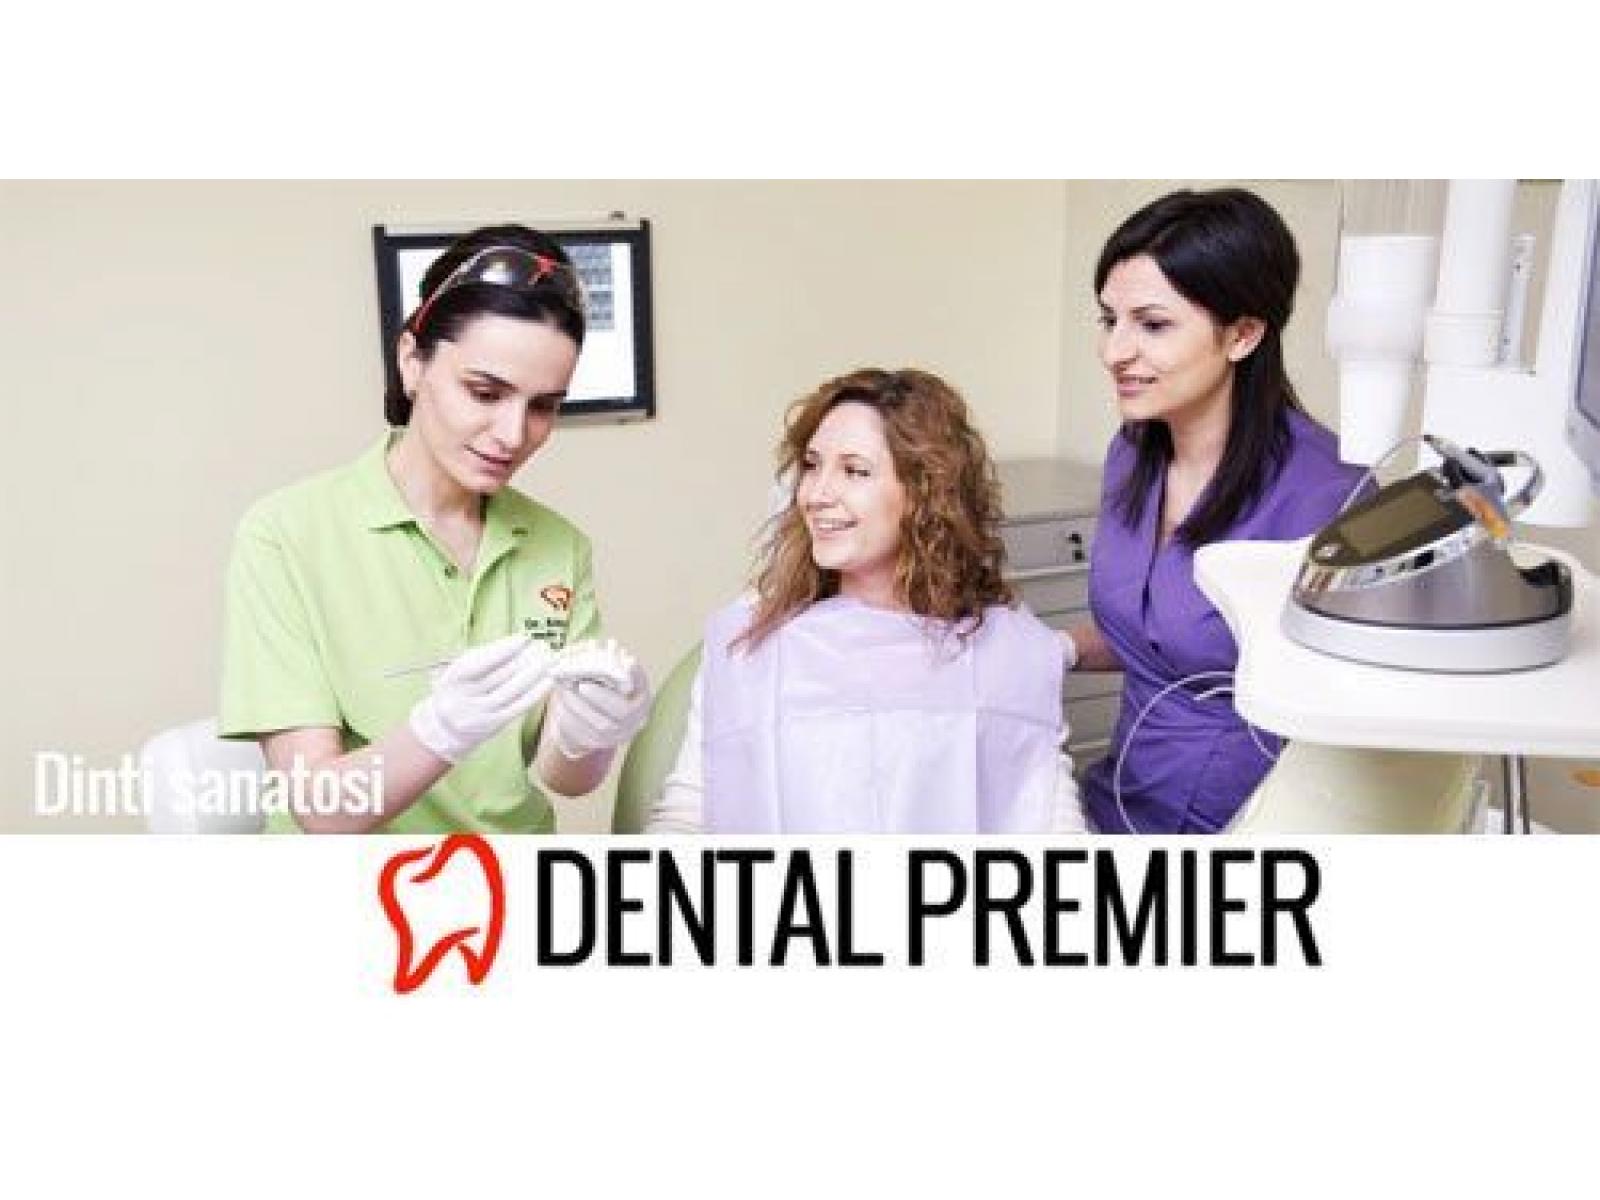 DENTAL PREMIER - dental-premier.jpg